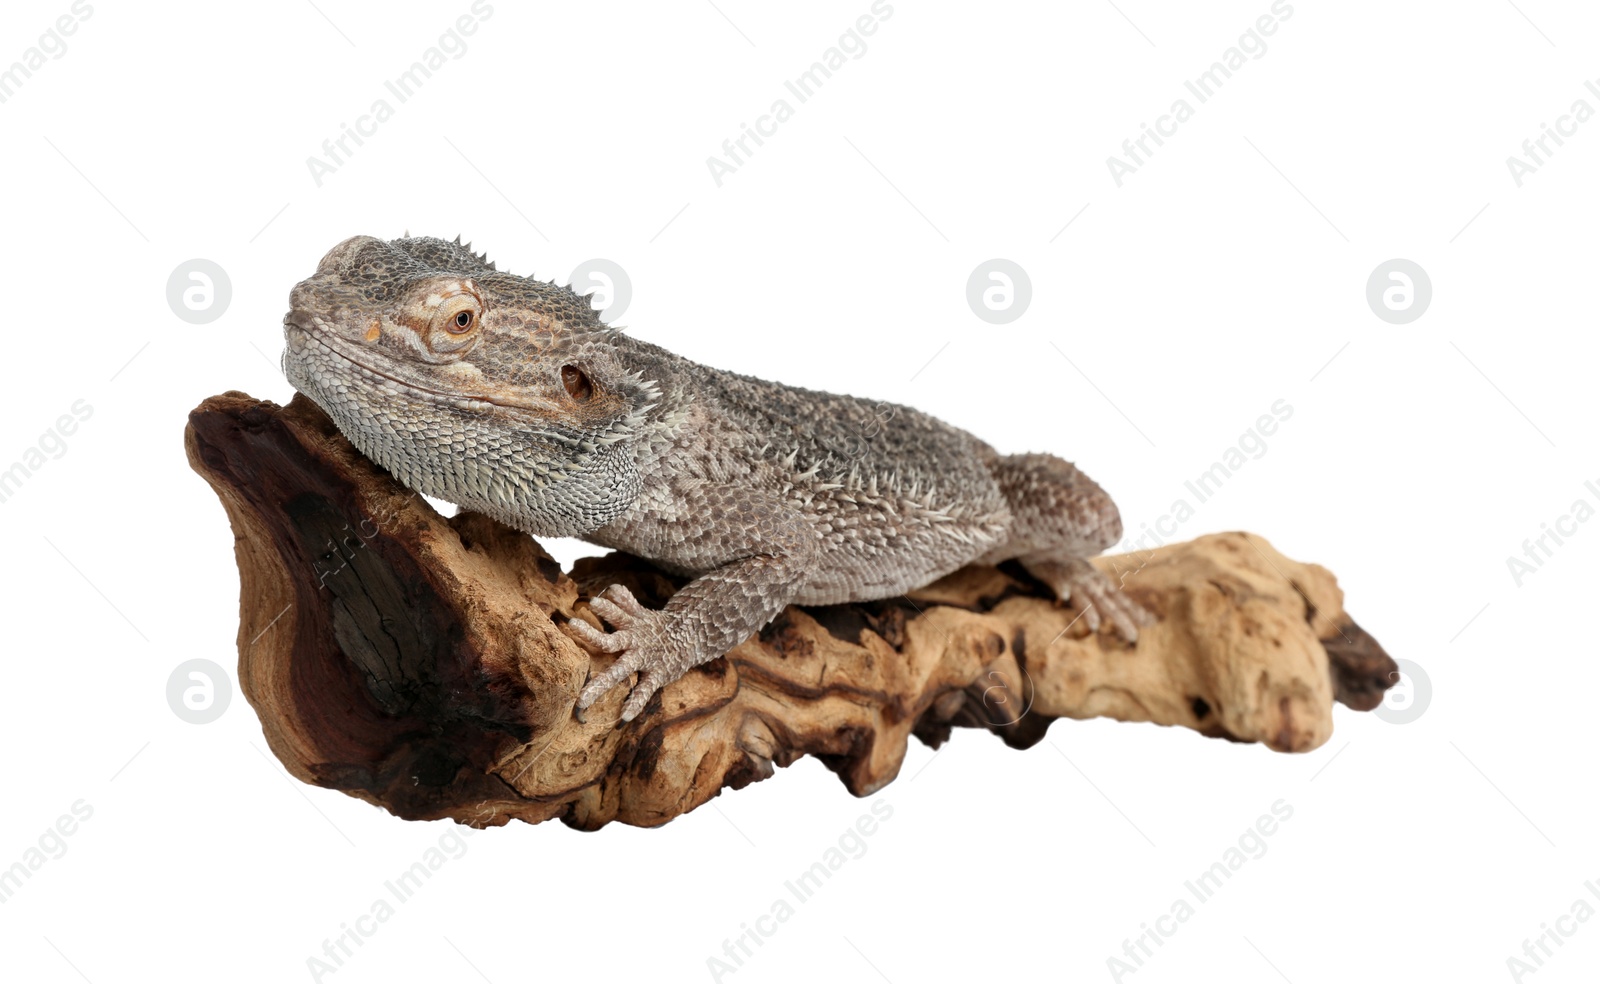 Photo of Bearded lizard (Pogona barbata) and tree branch isolated on white. Exotic pet